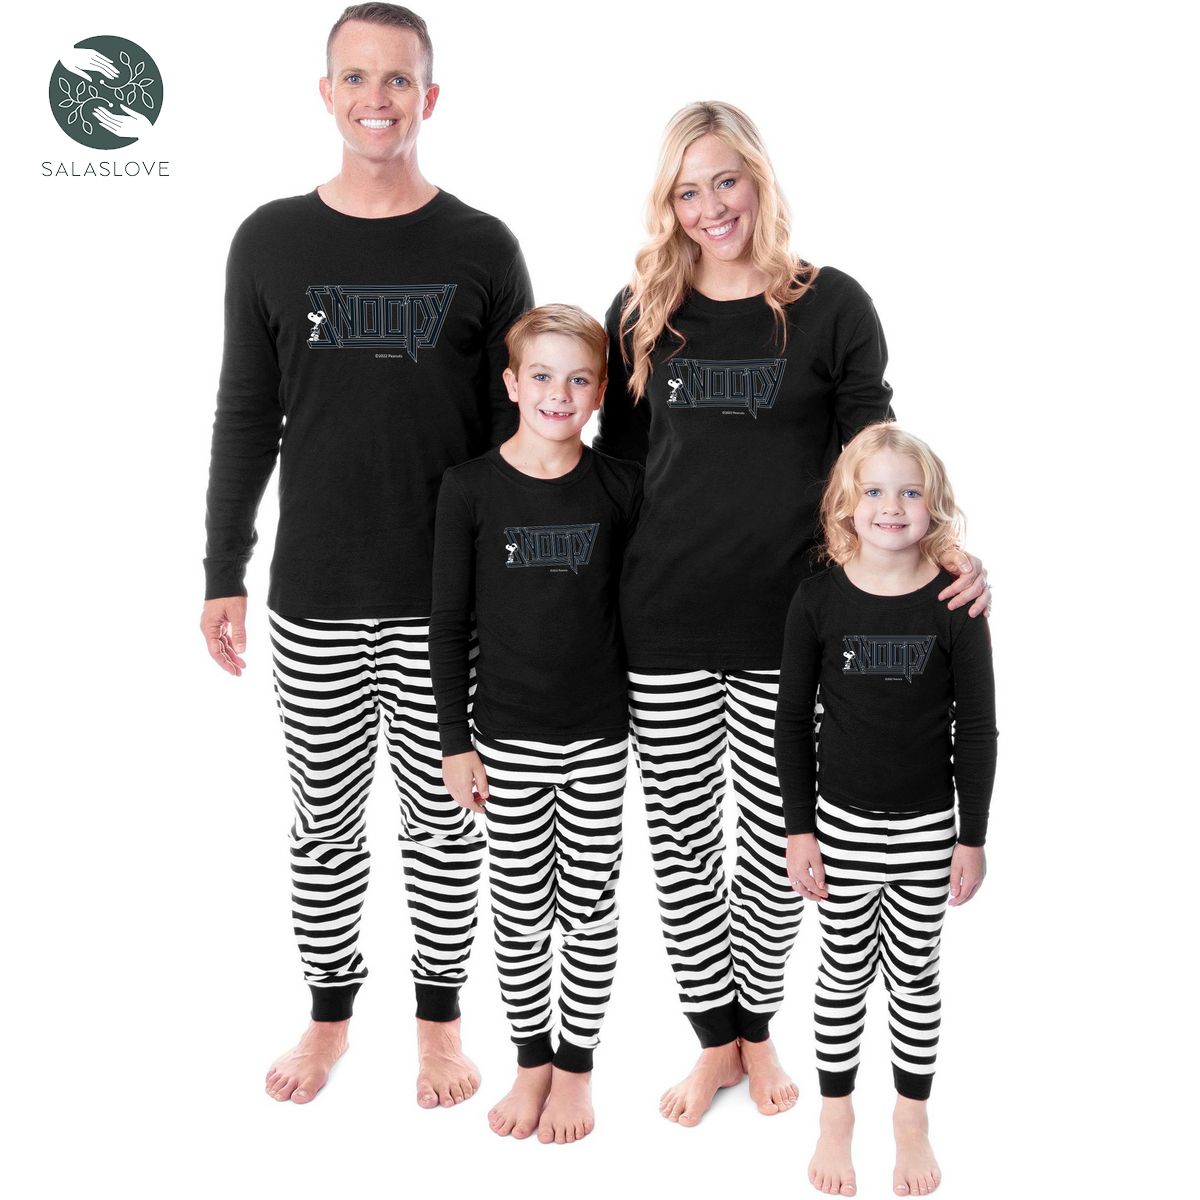 Peanuts Rocker Sleep Tight Fit Cotton Matching Family Pajama Set